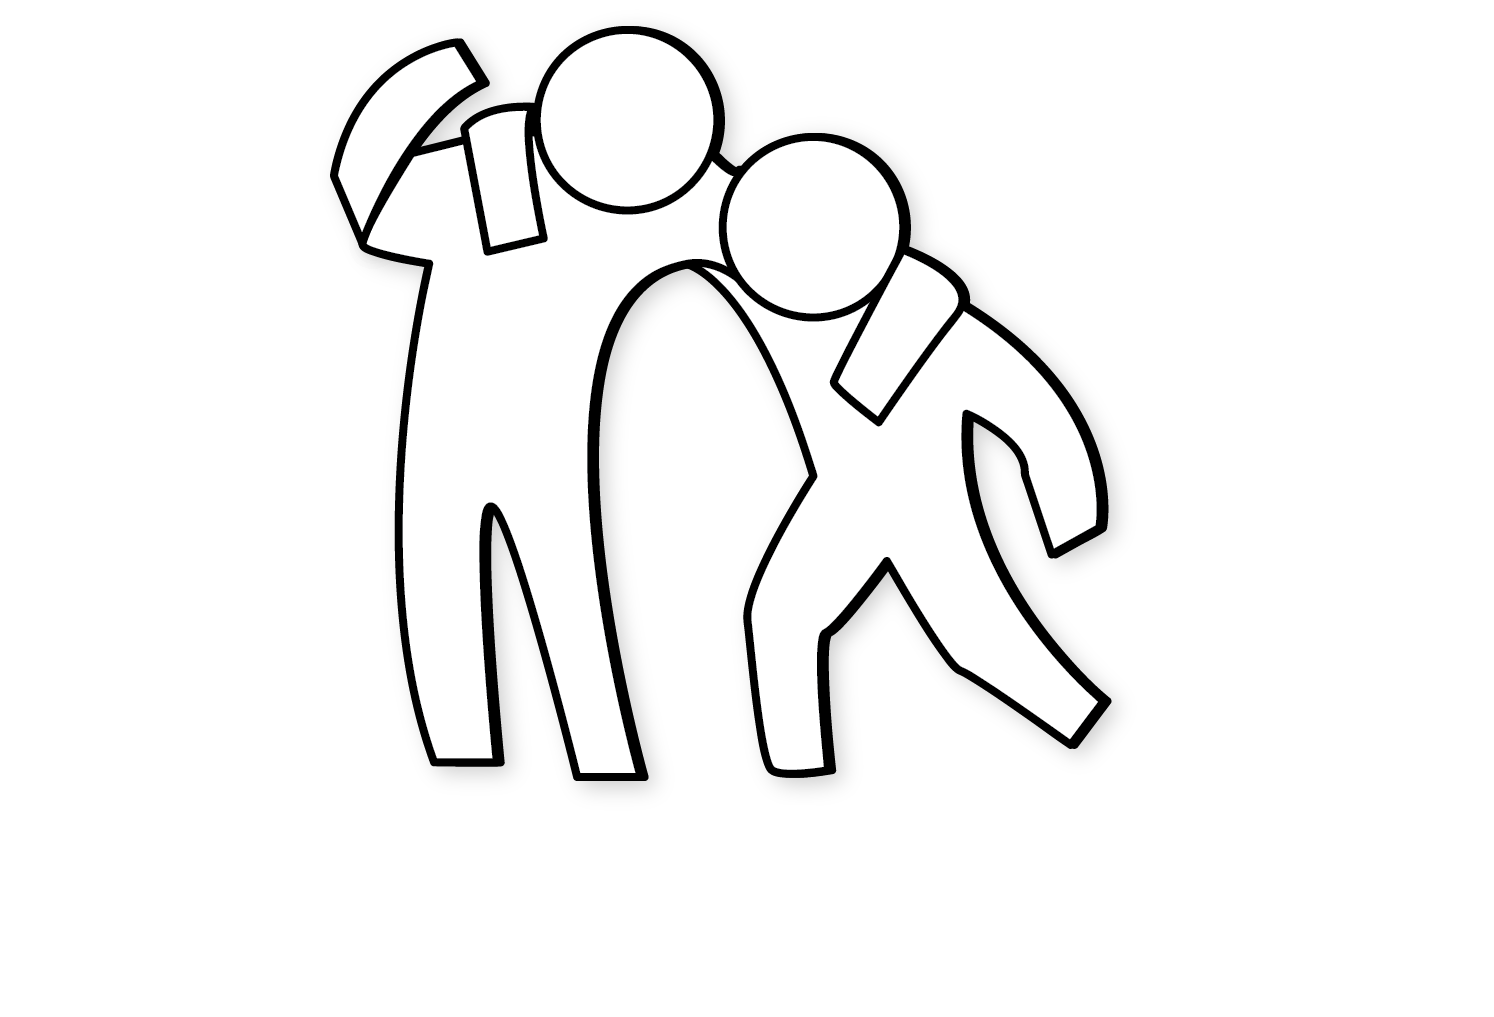 Auxilium Footer Logo